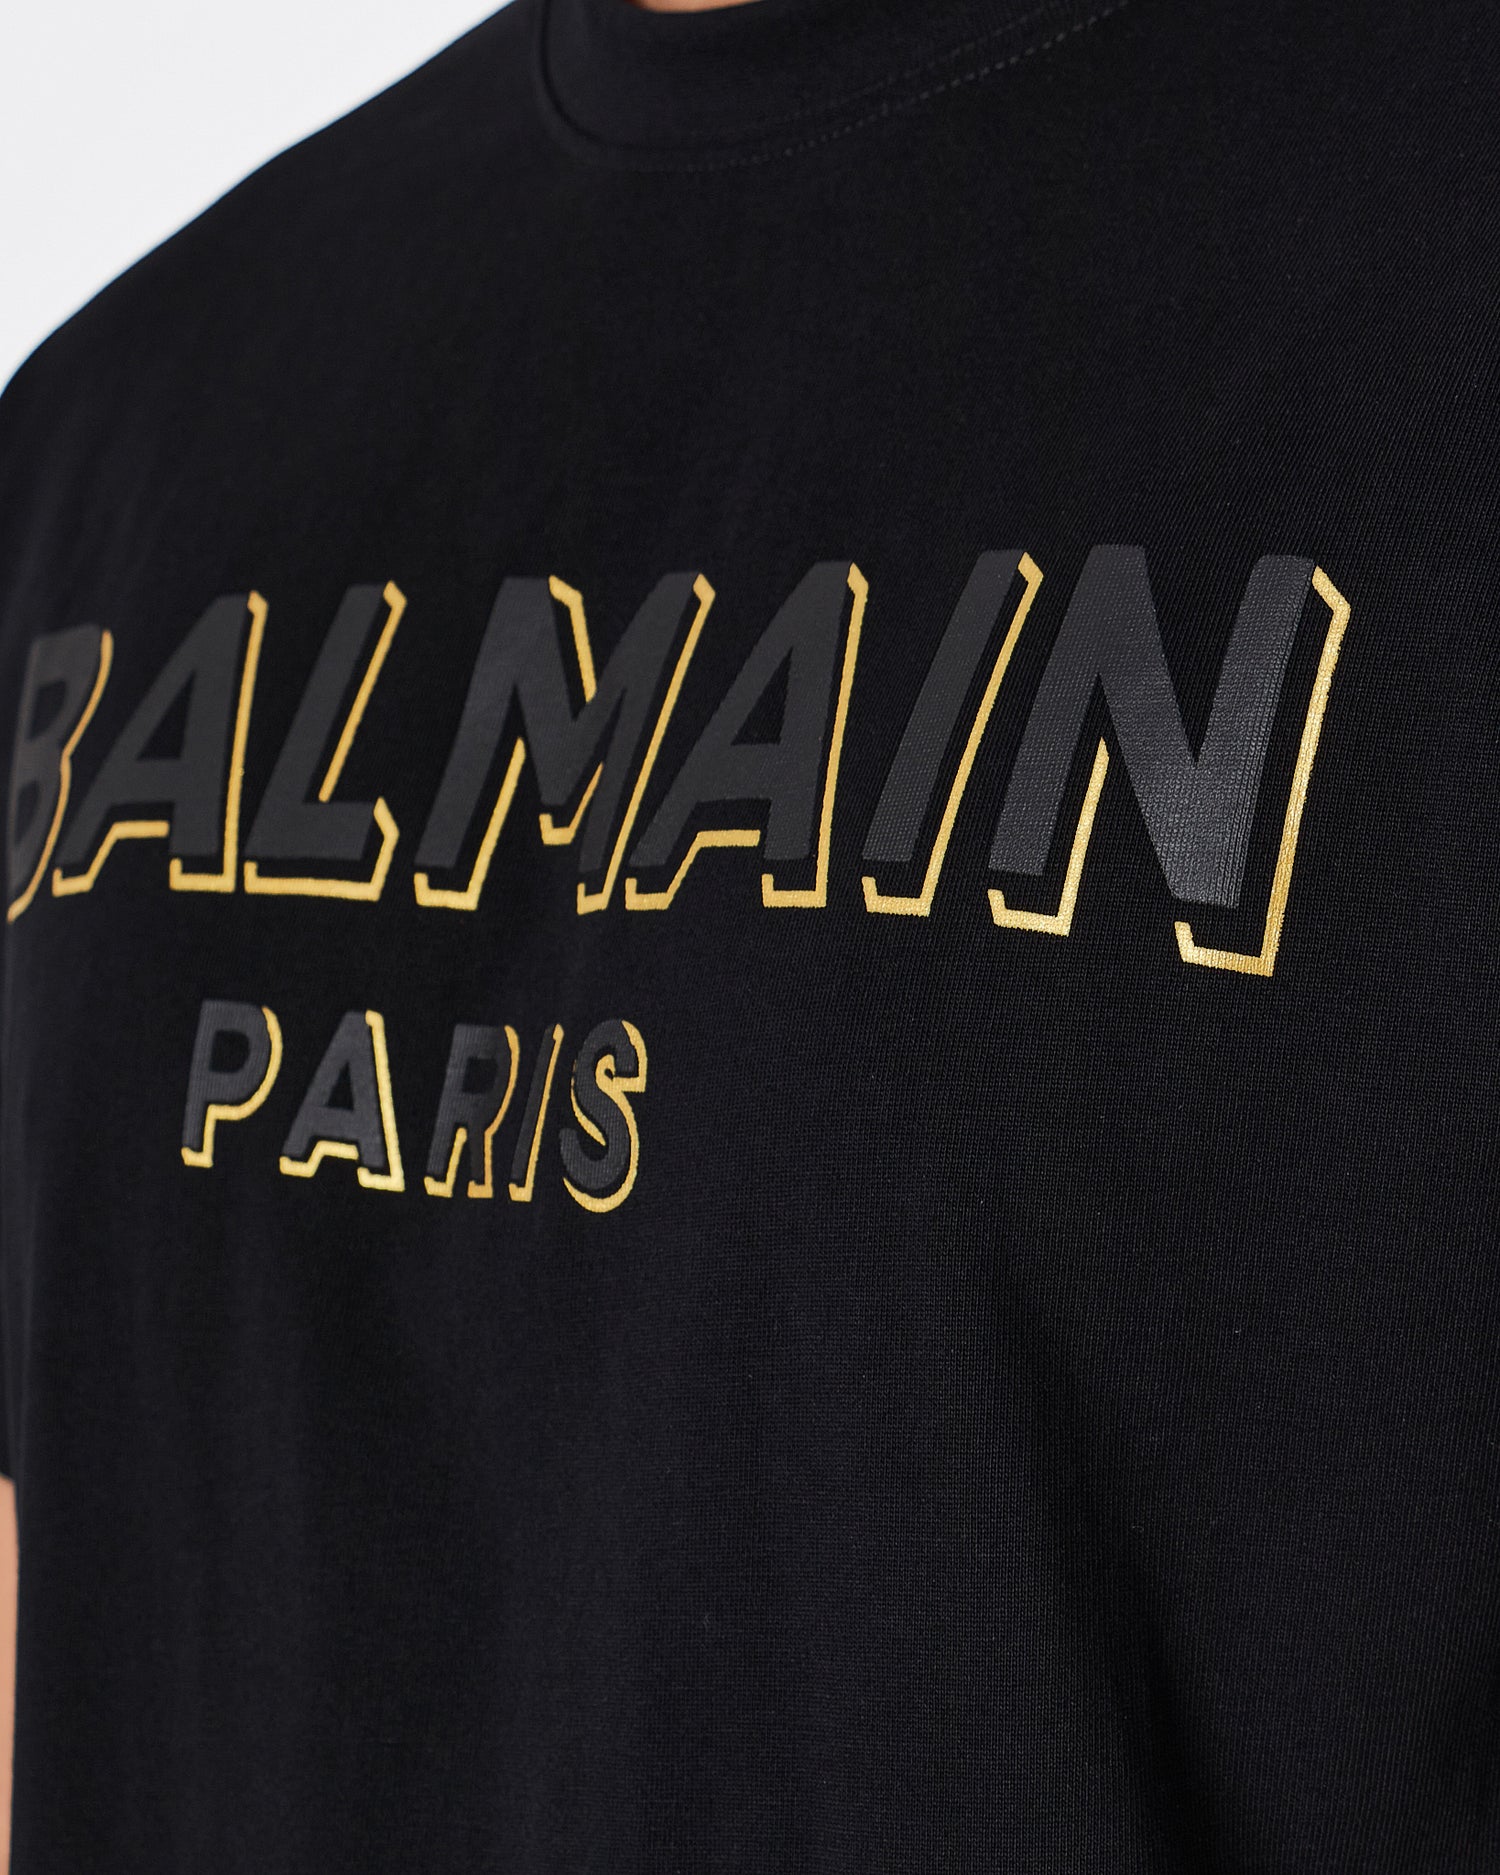 BAM Paris Logo Printed Men Black T-Shirt 22.50